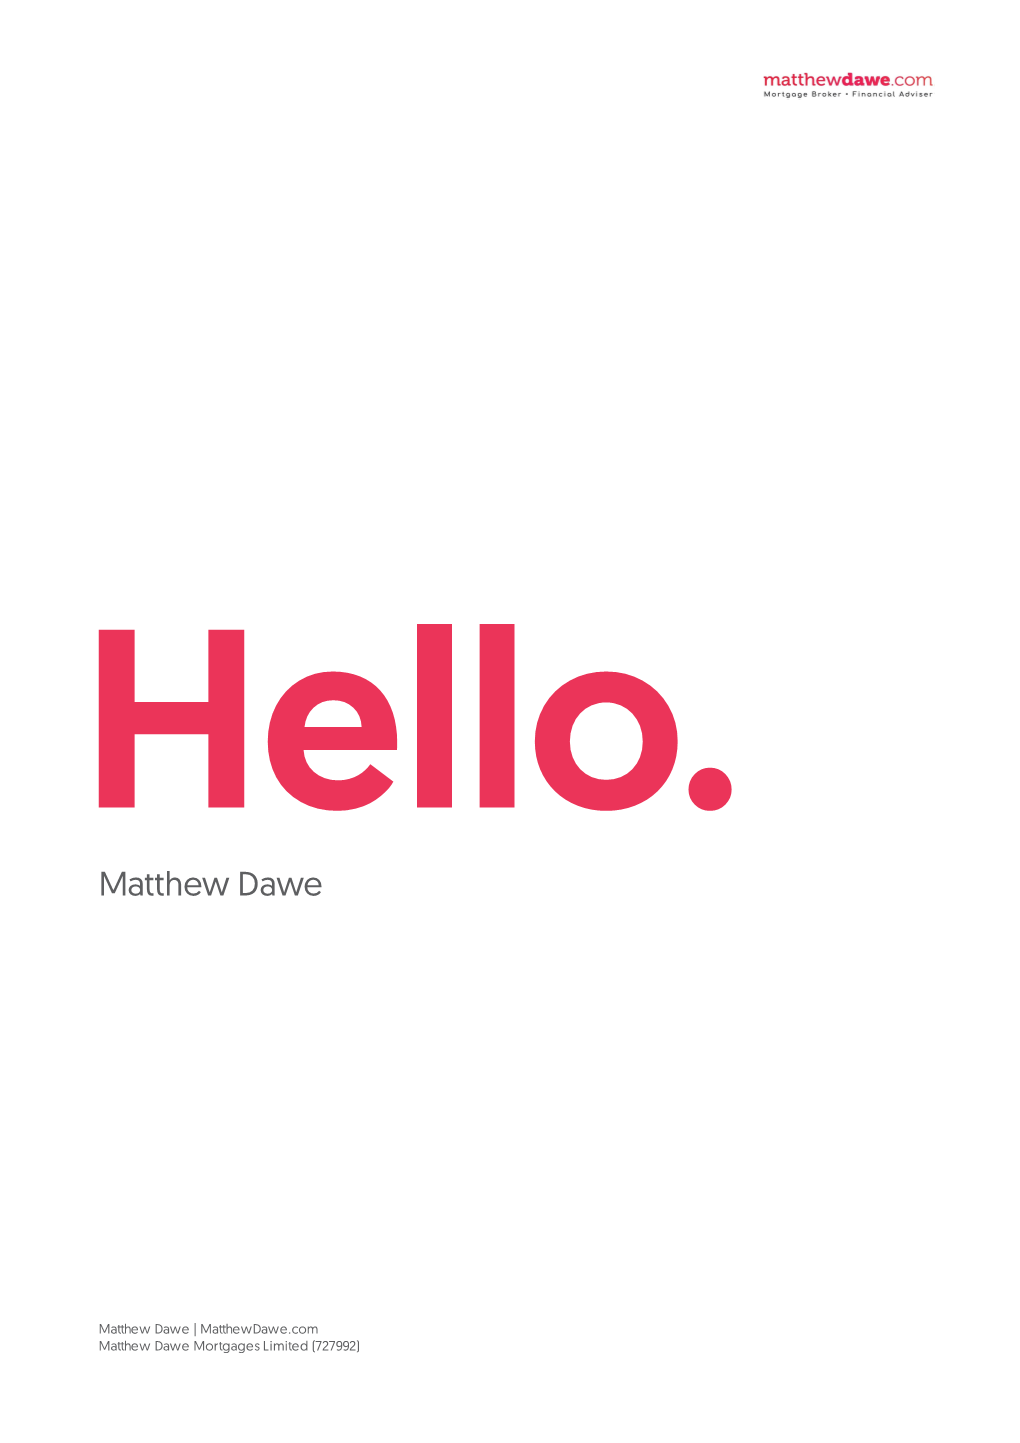 Matthew Dawe Mortgages Limited (727992) ������������������ ������������������ �������������������